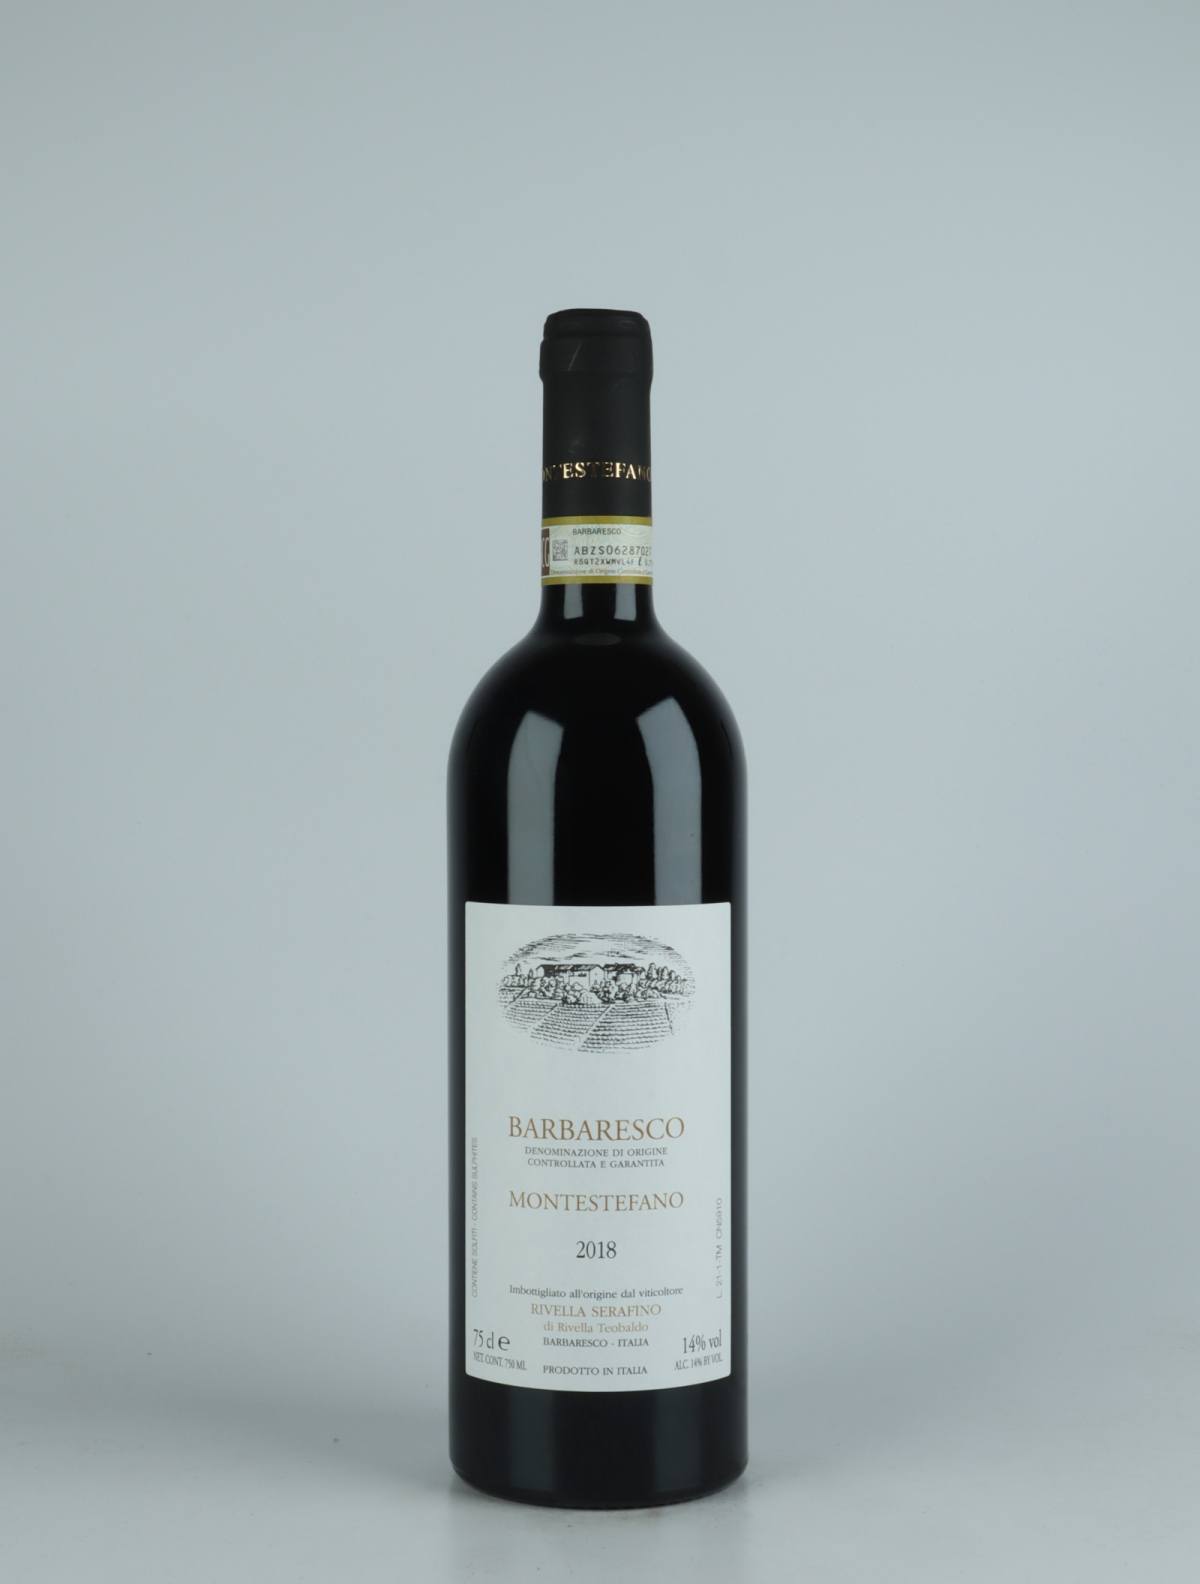 A bottle 2018 Barbaresco - Montestefano Red wine from Rivella Serafino, Piedmont in Italy